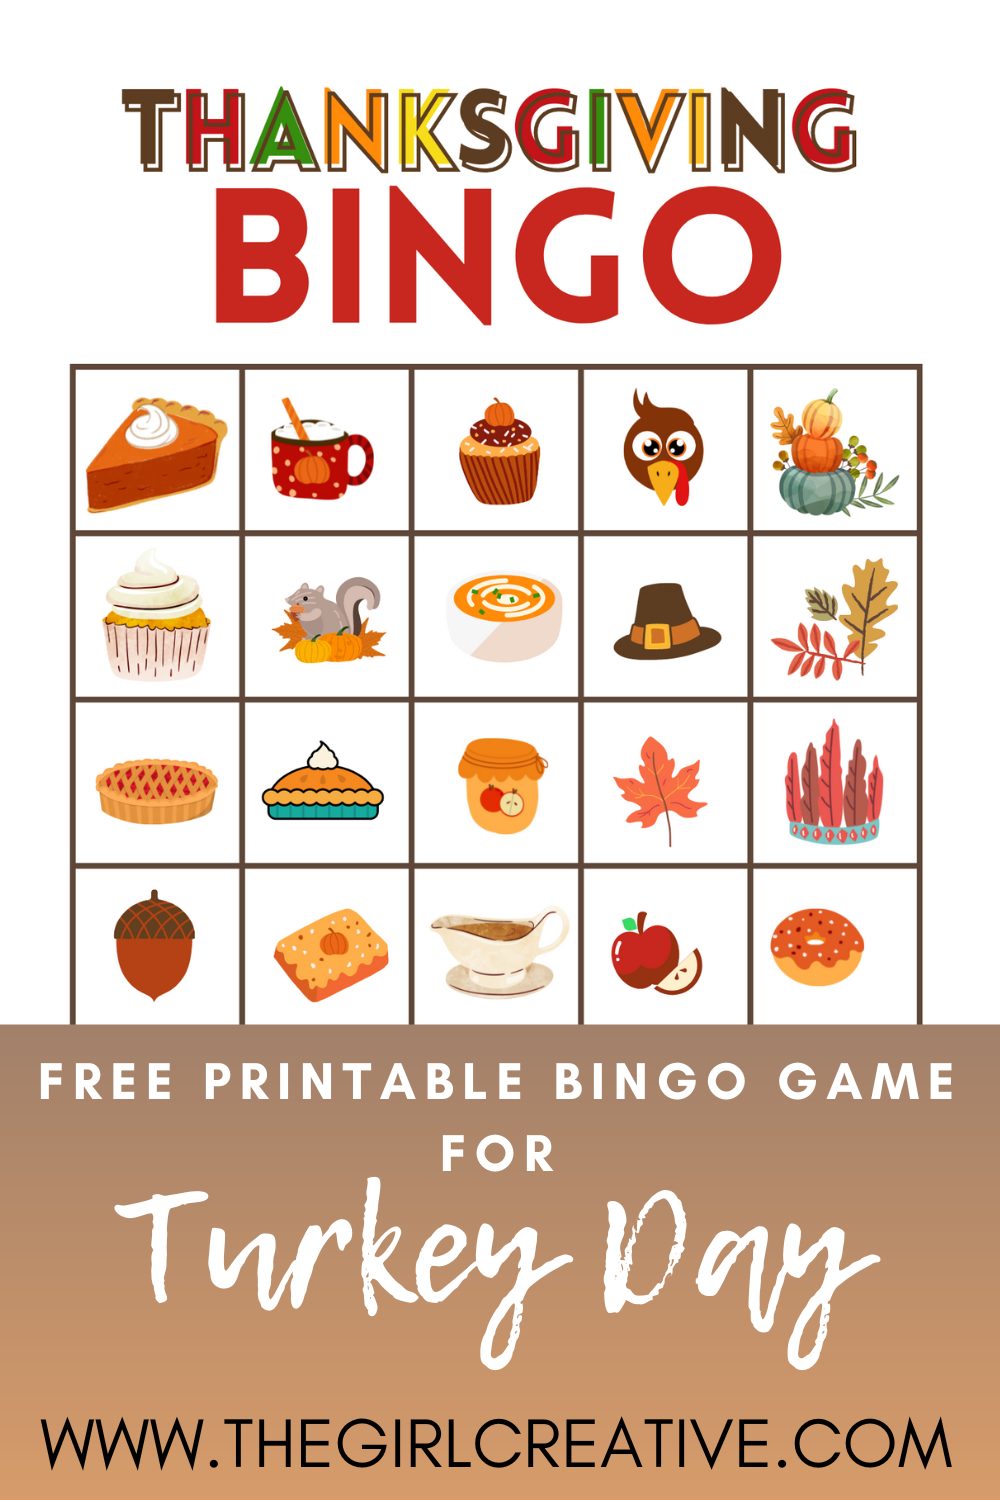 Free Printable Thanksgiving Bingo Cards The Girl Creative